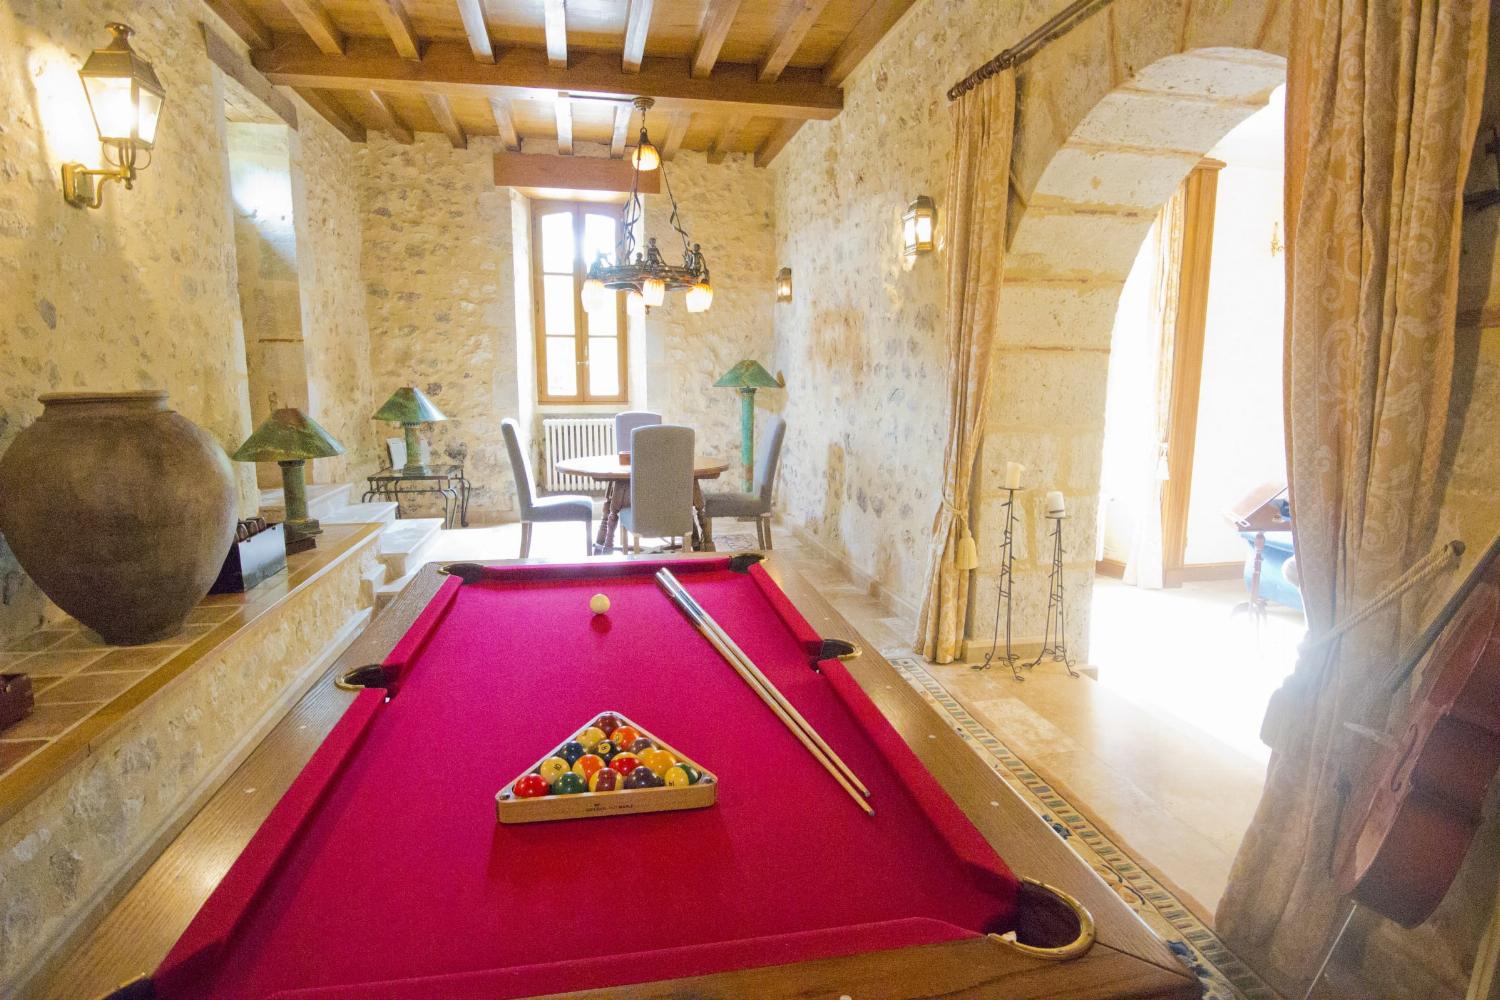 Table de billard | Château de vacances en Dordogne